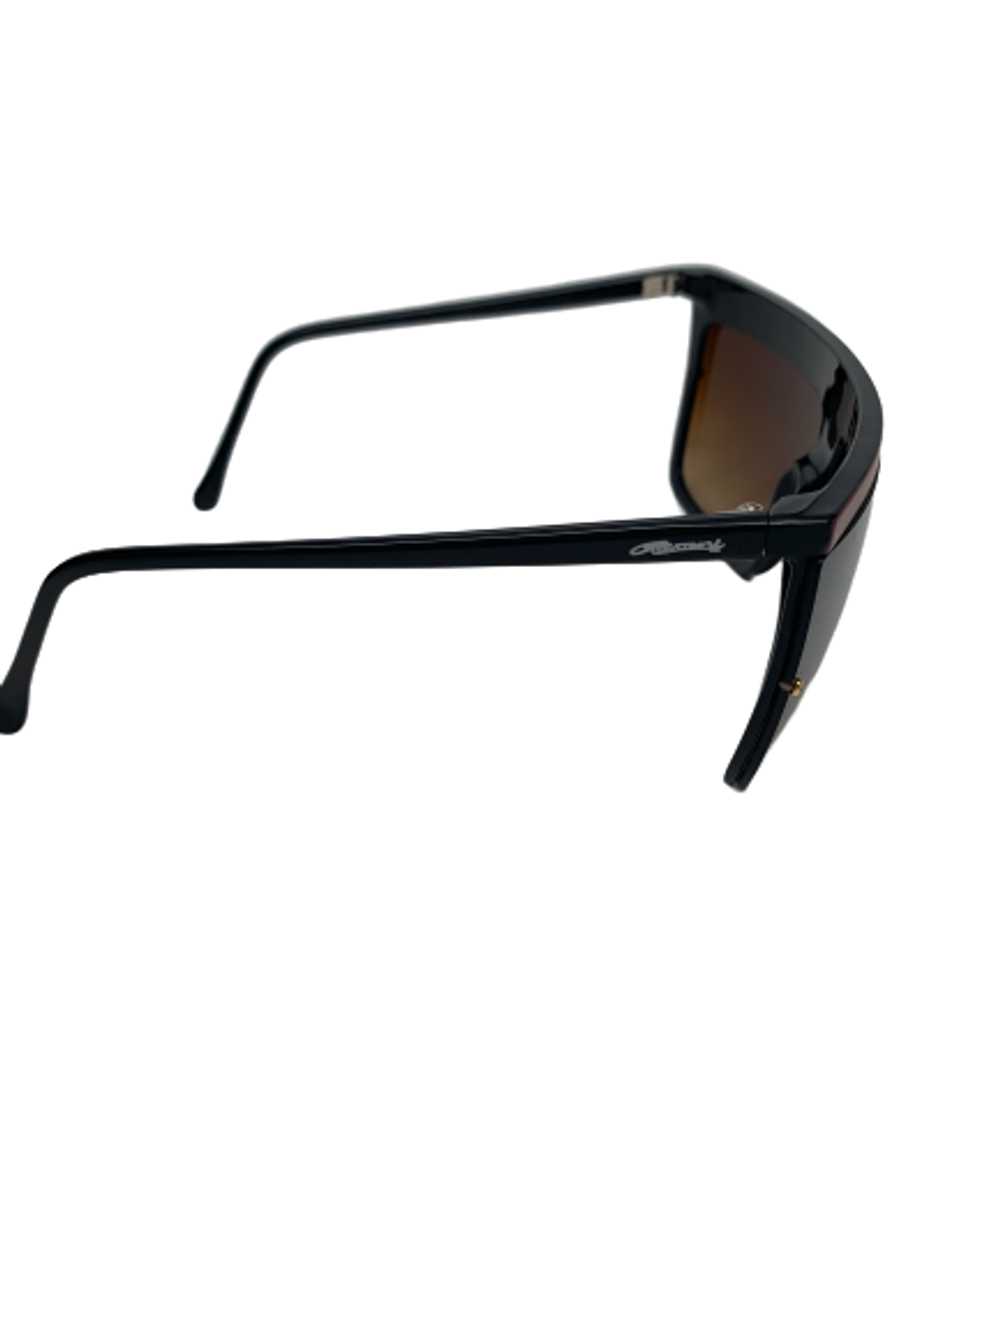 1980s Shield Lens Sunglasses - image 2